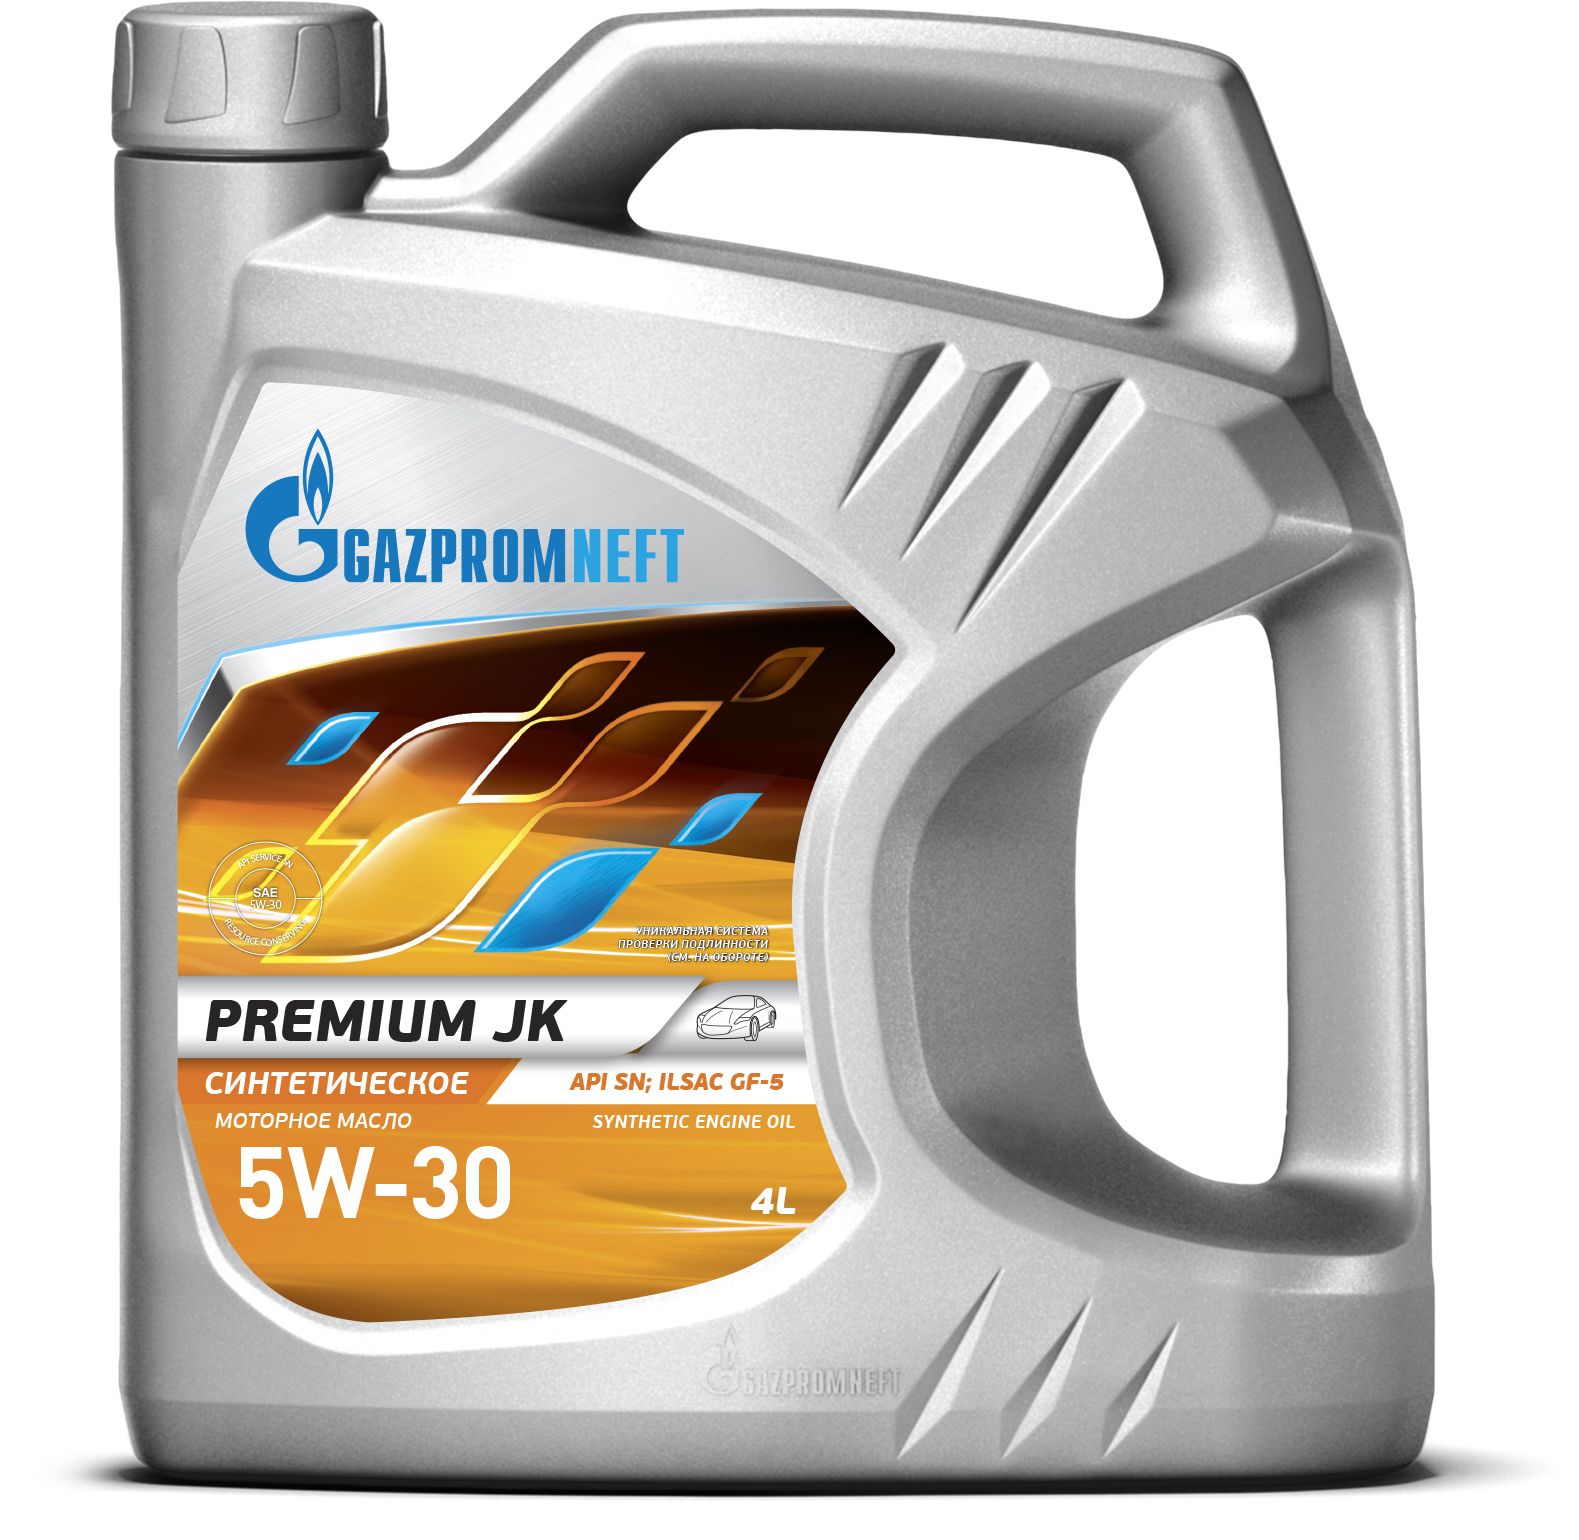 Масло трансмиссионное газпромнефть gl 4. Gazpromneft Premium n 5w40 4л. Gazpromneft Premium JK 5w-30. Gazpromneft масло Premium l 10w-40 4л.